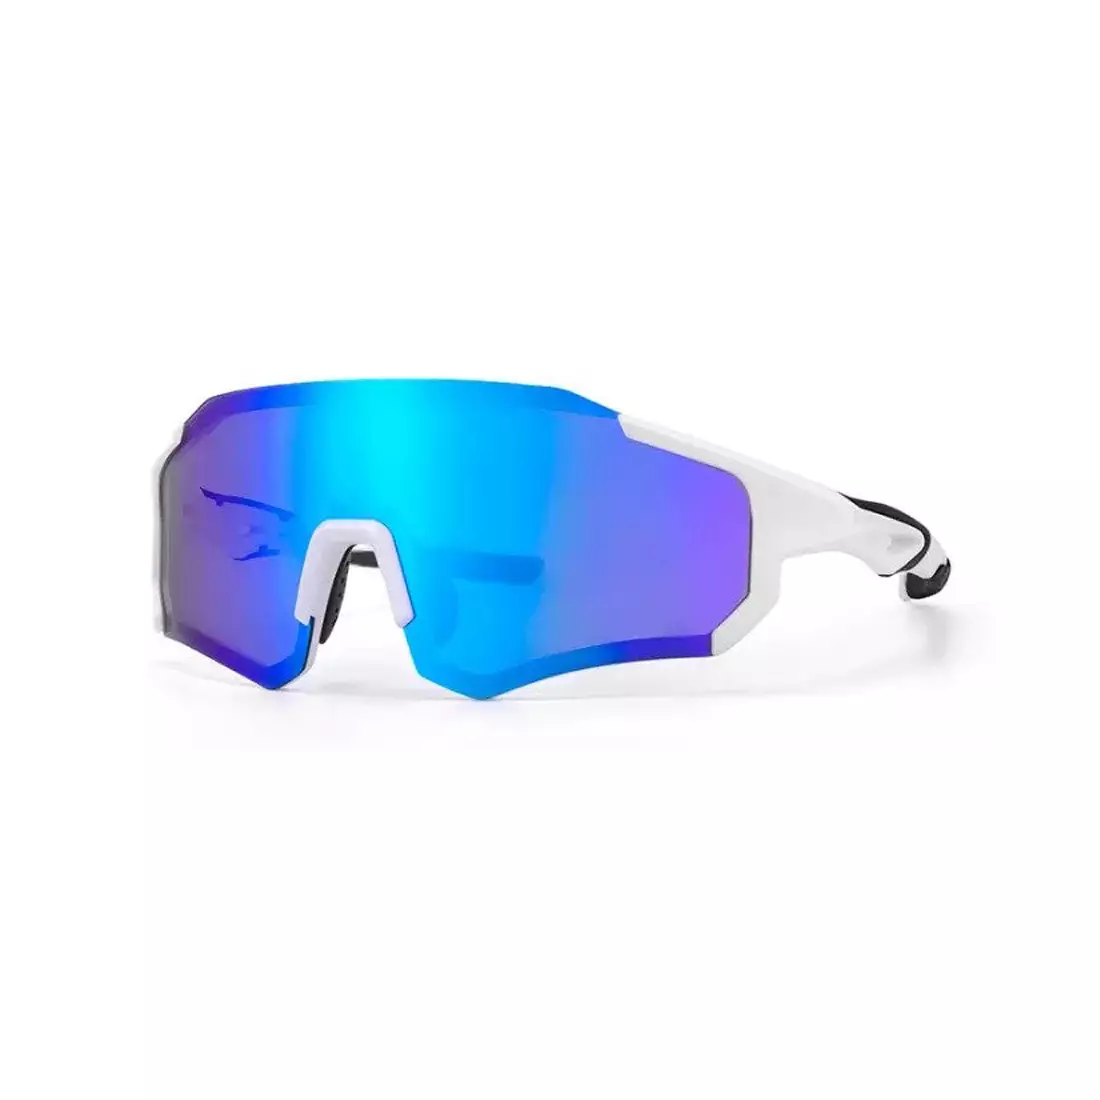 Rockbros 10183 bicycle / sports glasses with polarized white